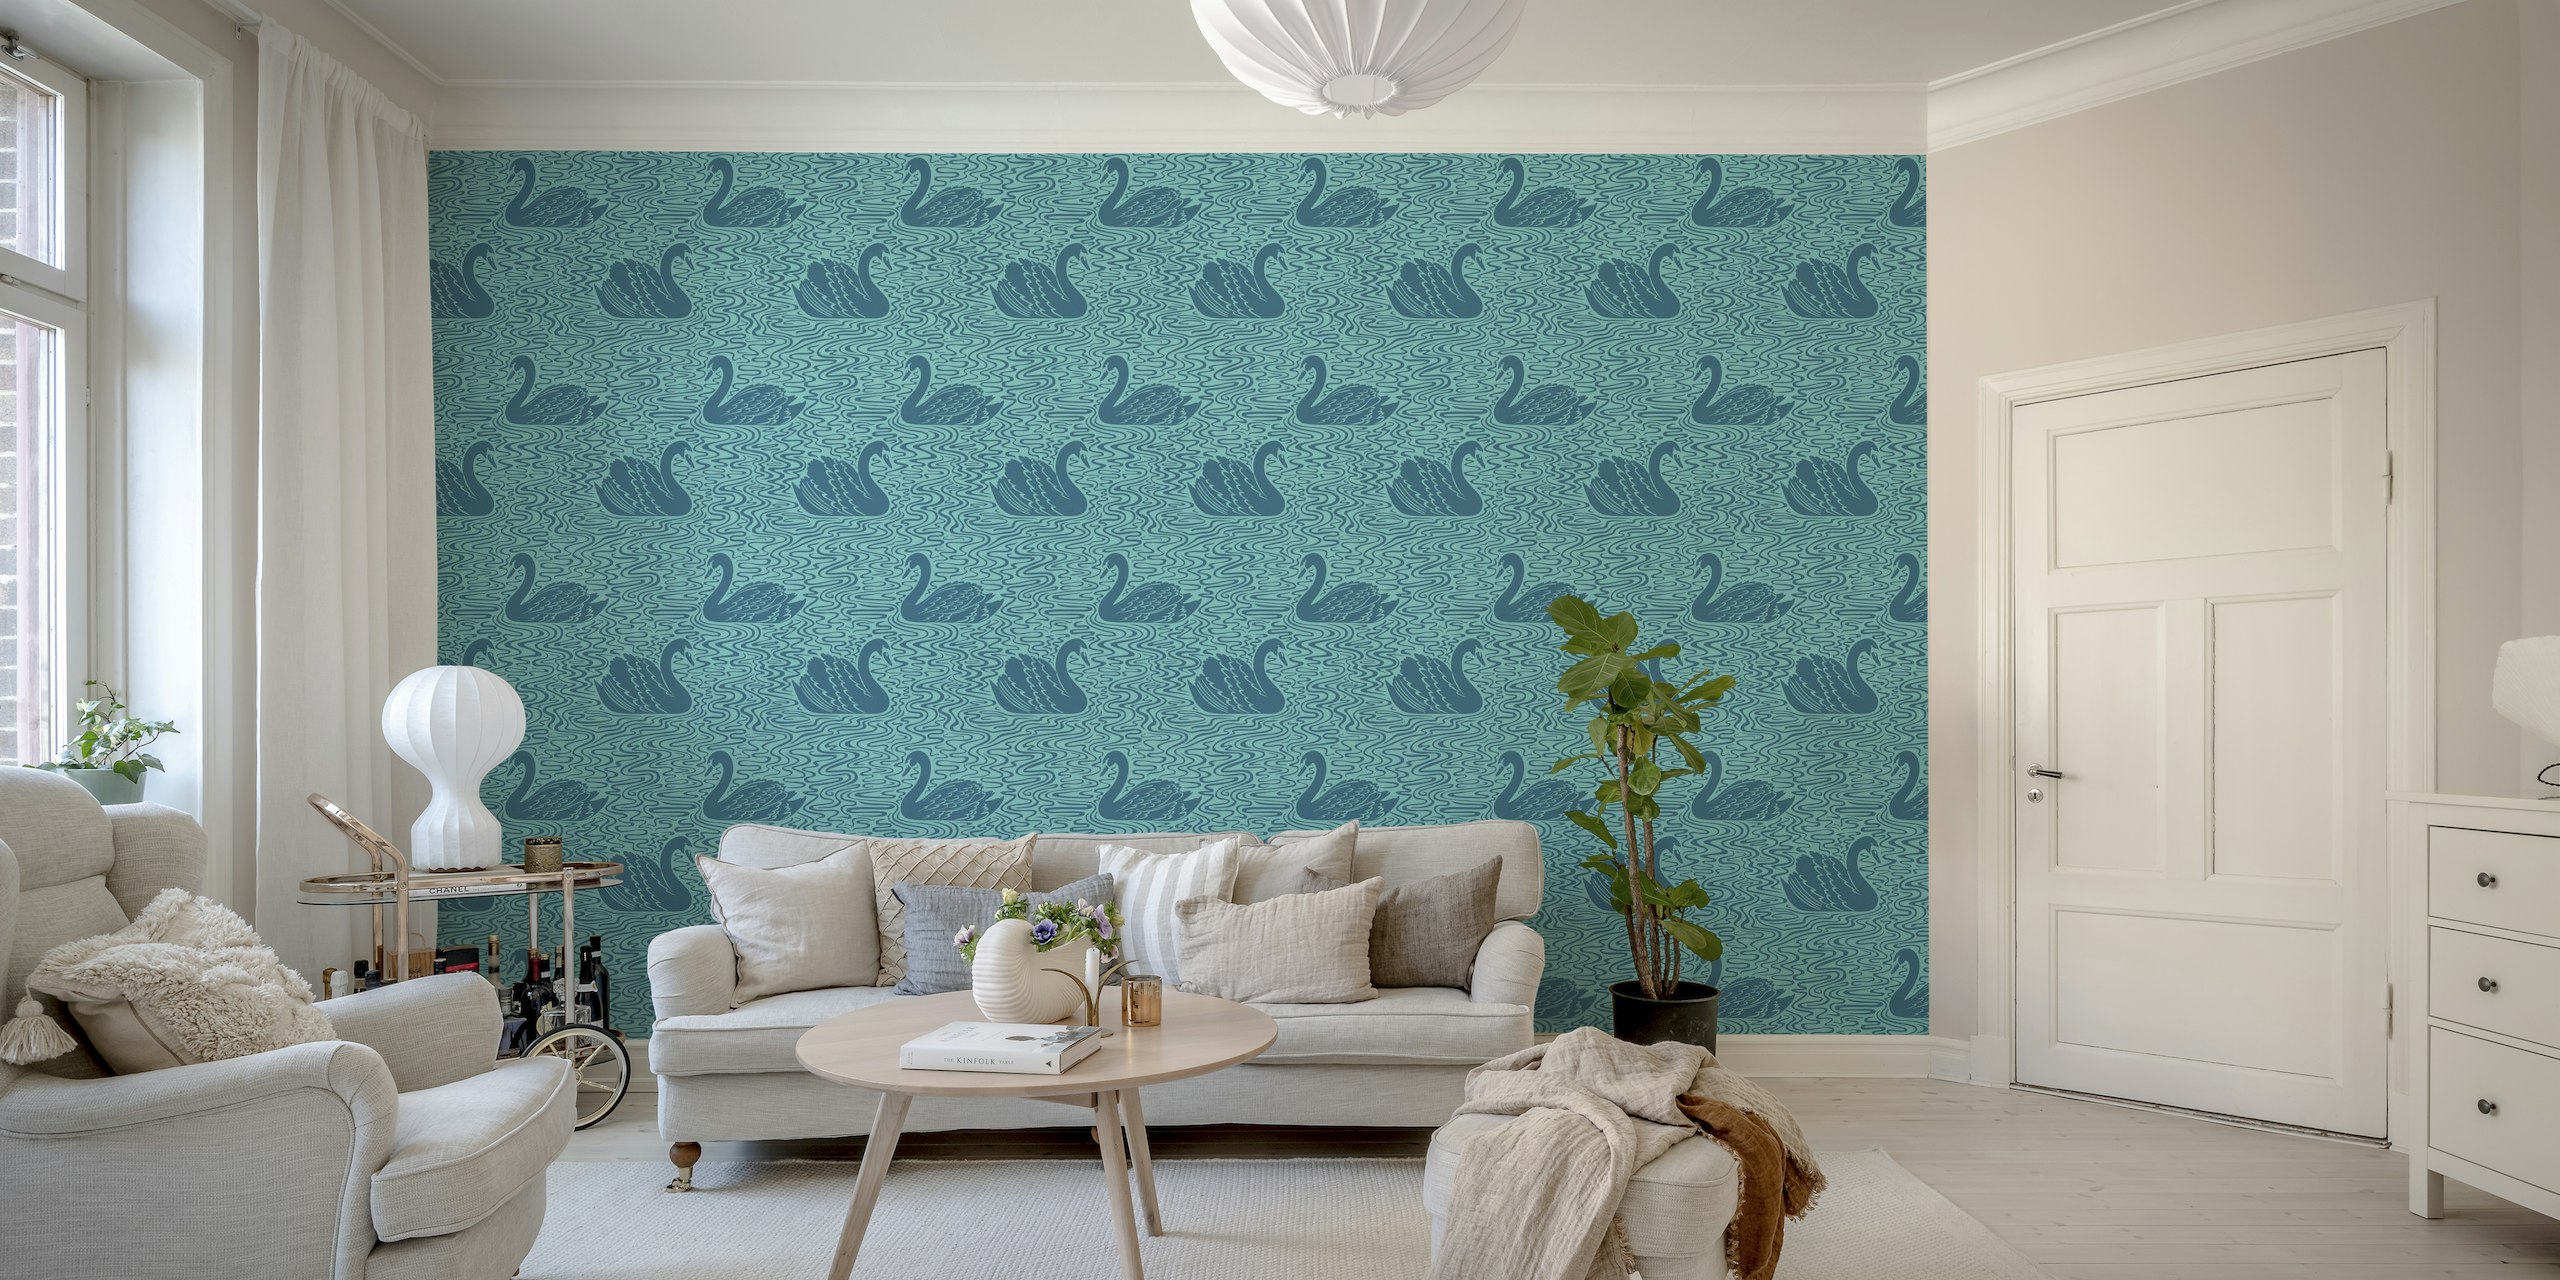 Swan Lake - teal on aqua turquoise blue wallpaper